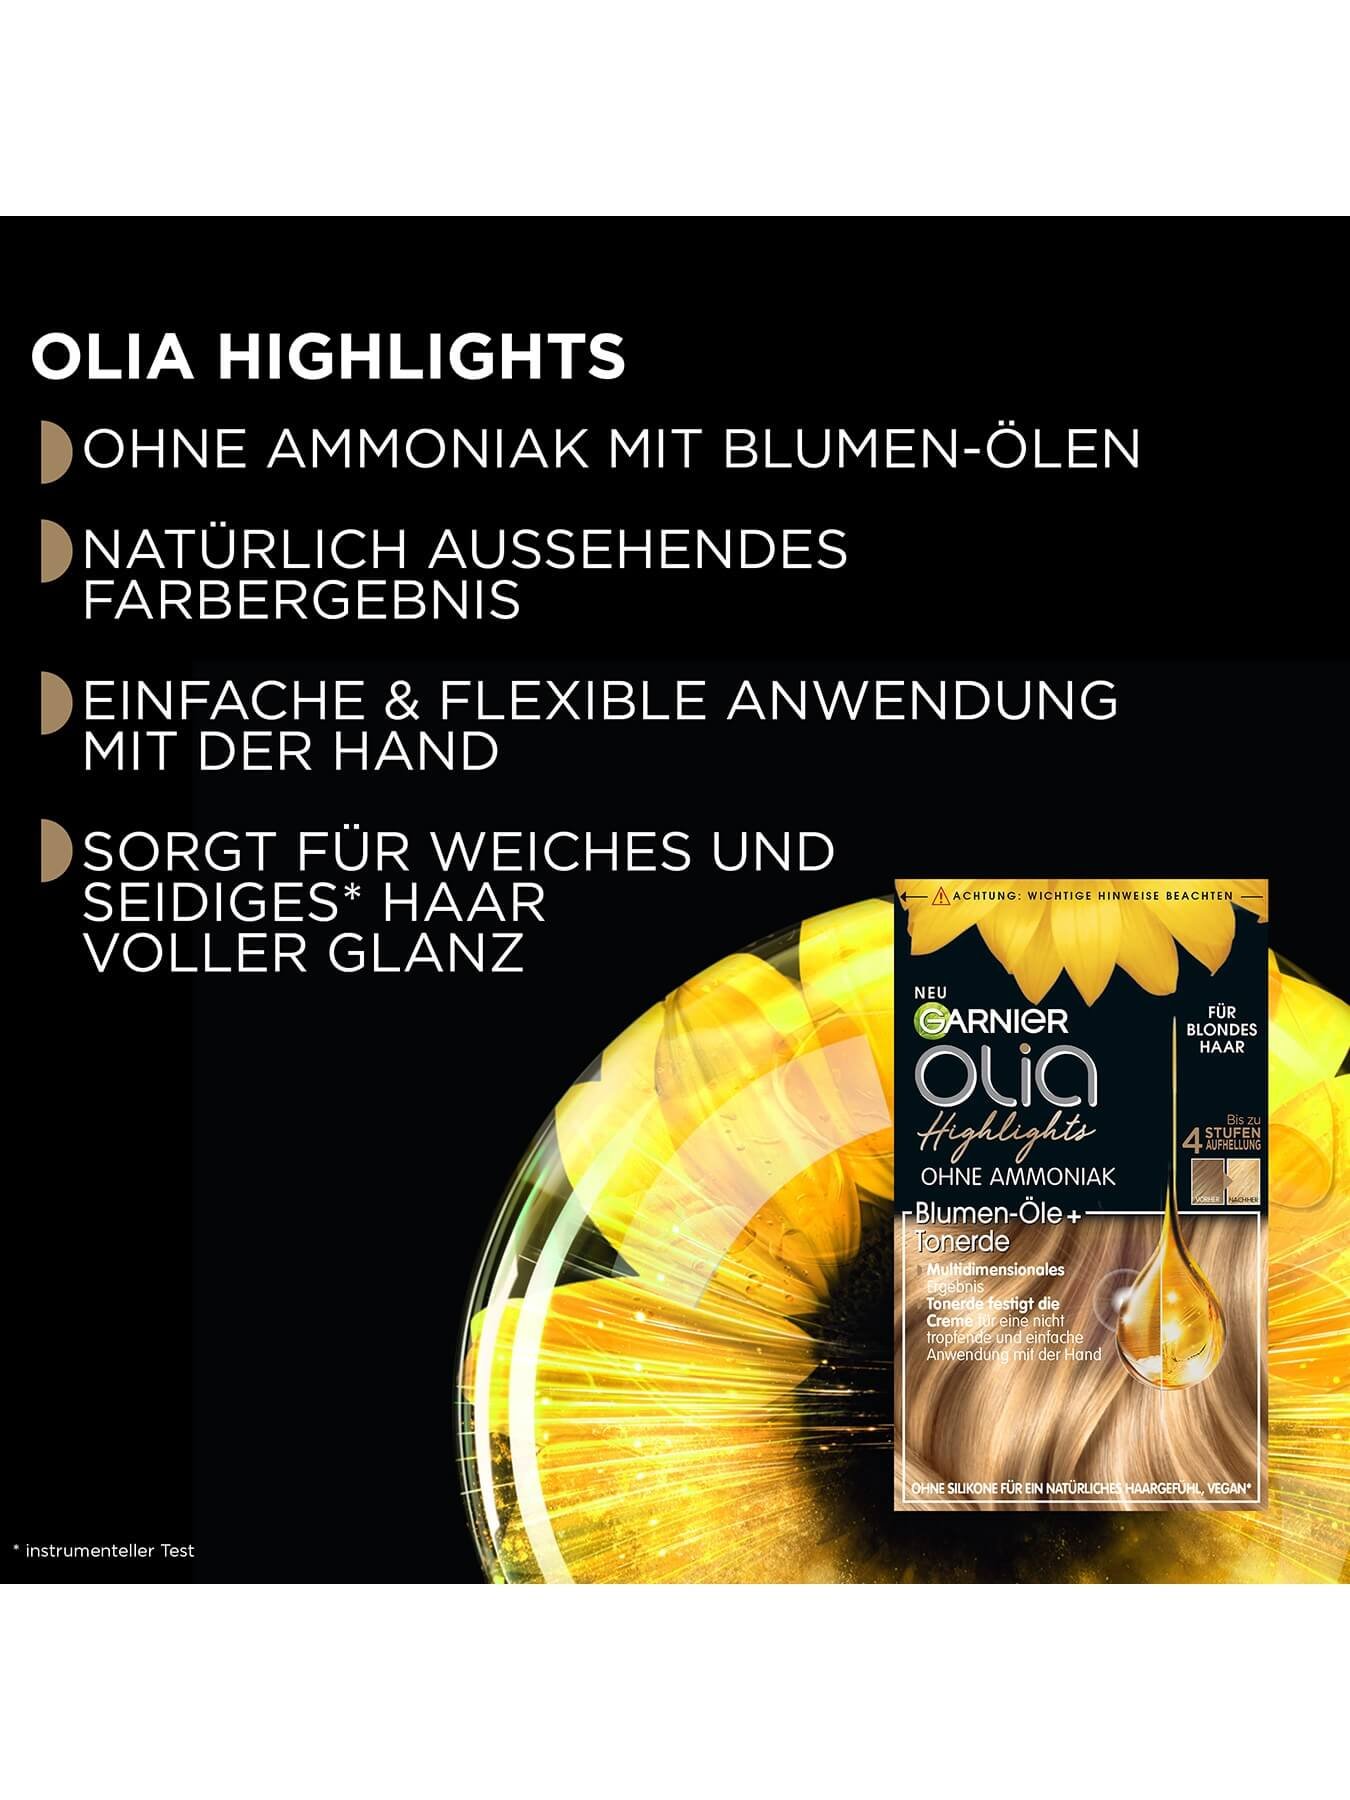 Olia Highlights Vorteile